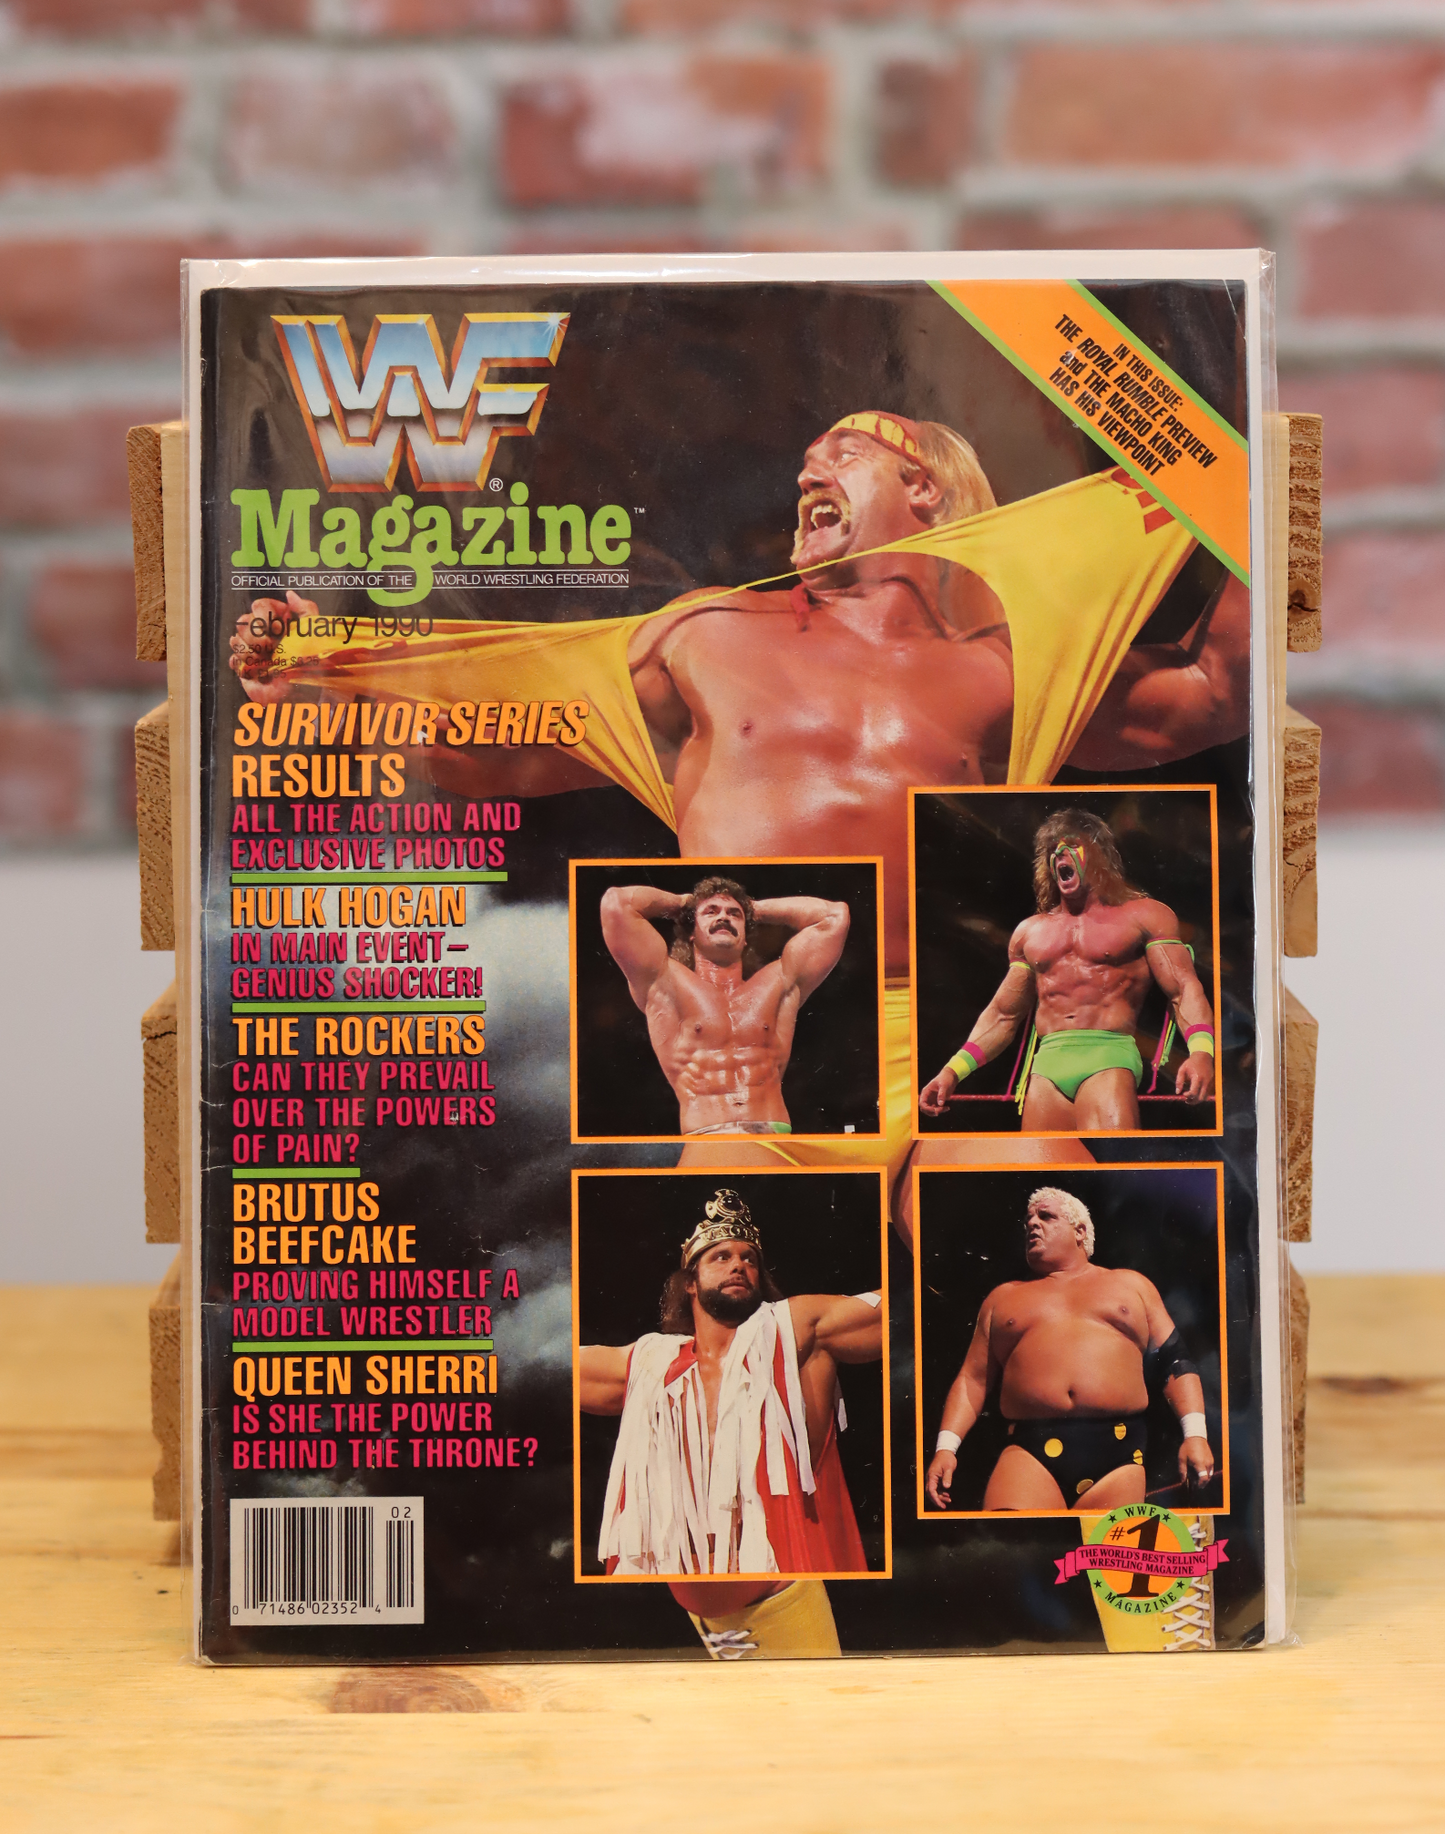 Original WWF WWE Vintage Wrestling Magazine Survivor Series '89 Highlights (February 1990)